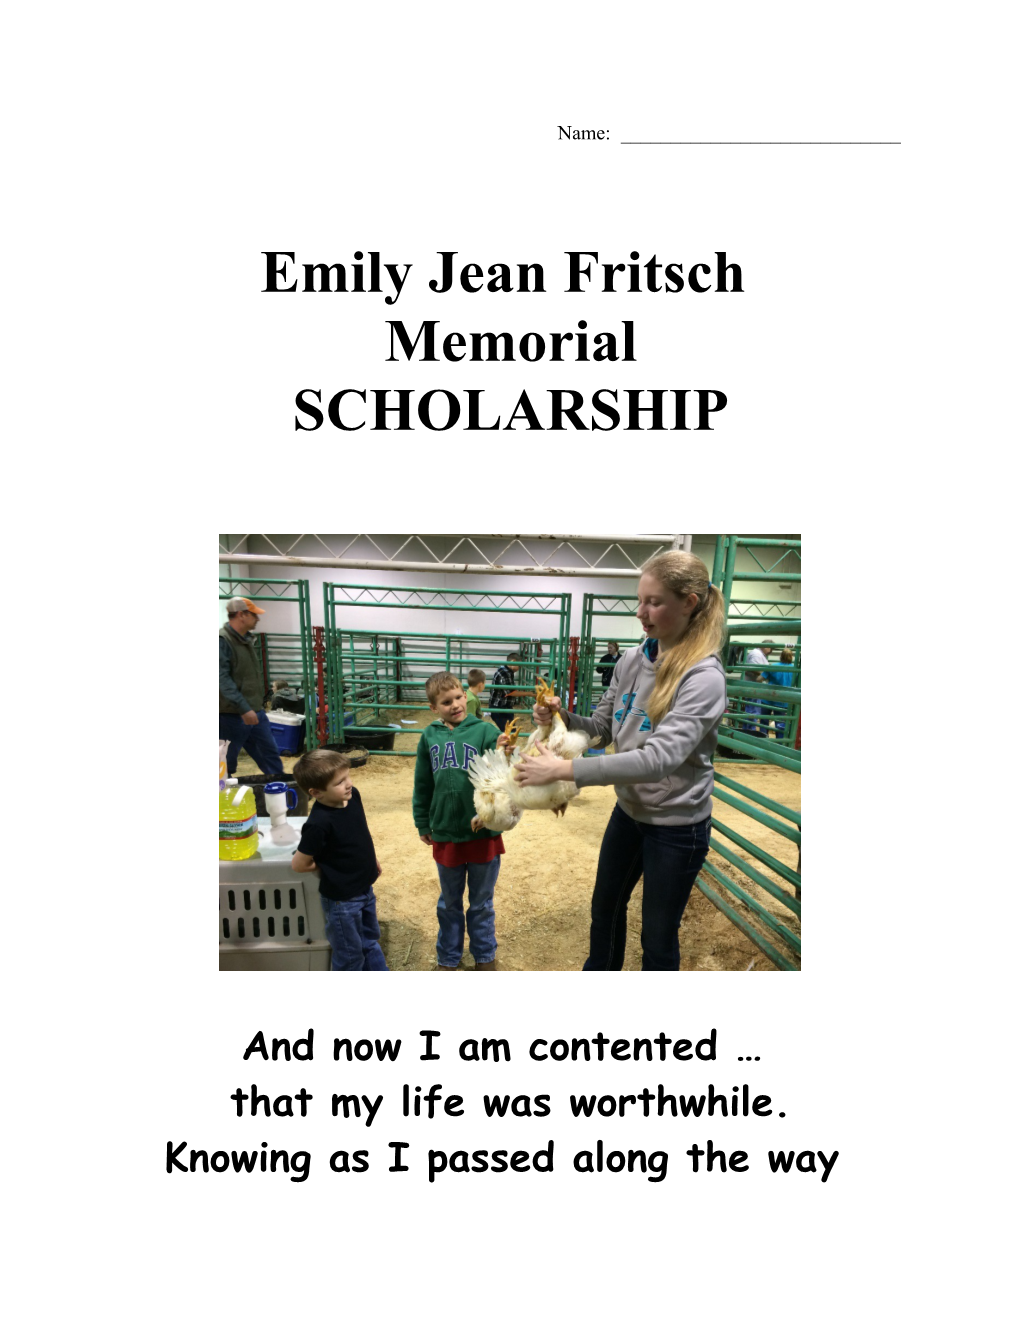 Emily Jean Fritsch